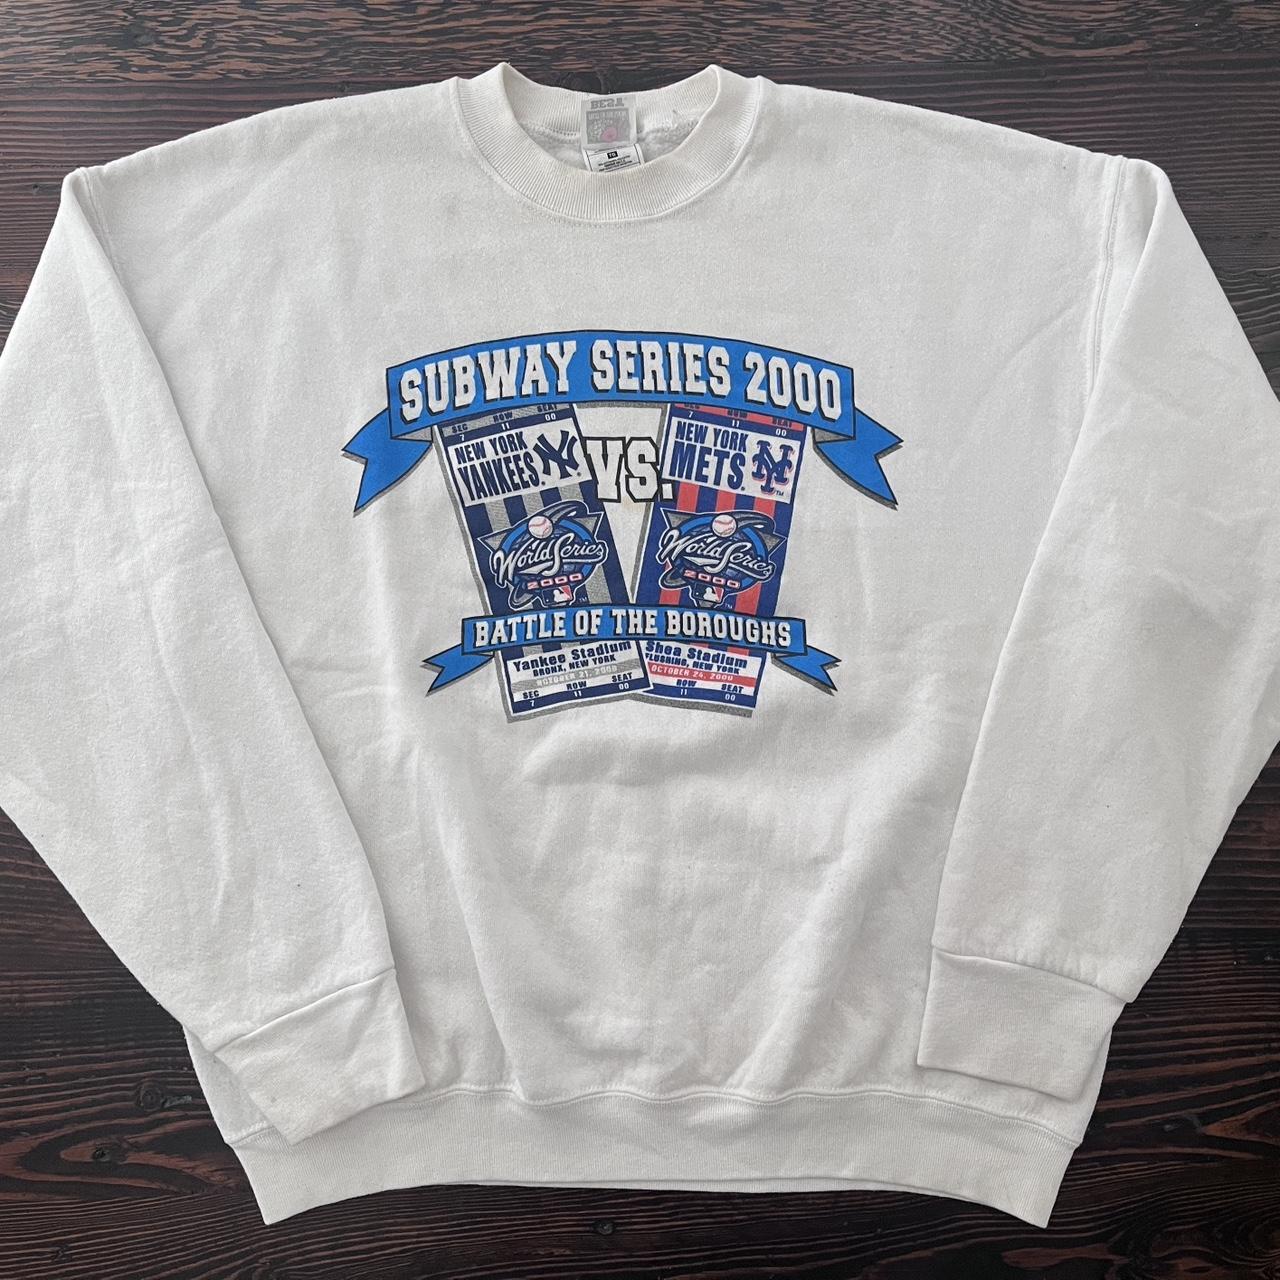 World Series 2000 T Shirt Battle of New York Yankees Mets 